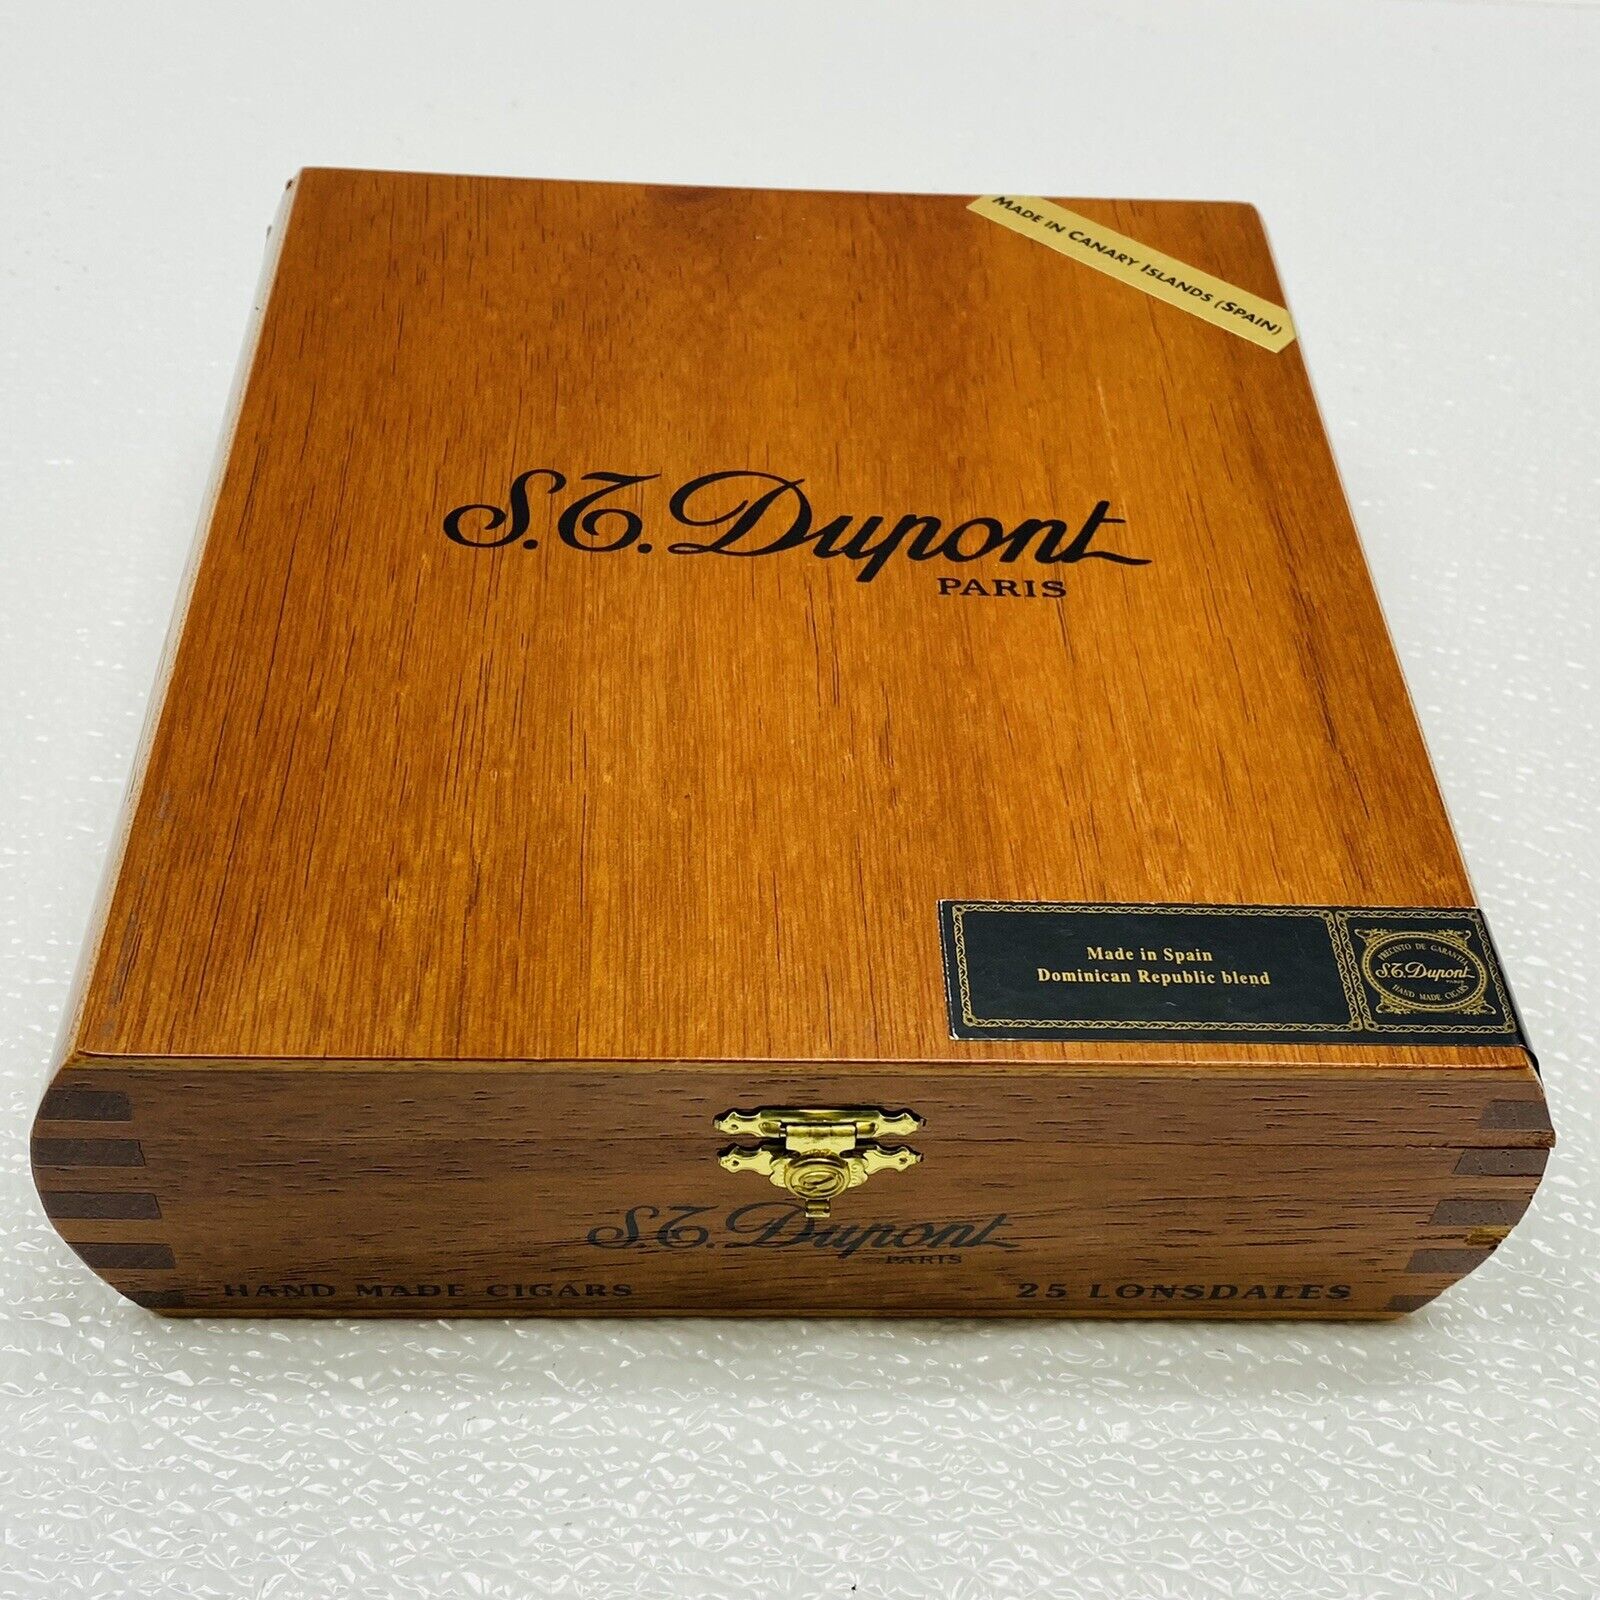 S.T.Dupont Paris Lacquered Wood Cigars Box for 25 Lonsdales. Rare HTF Unique 